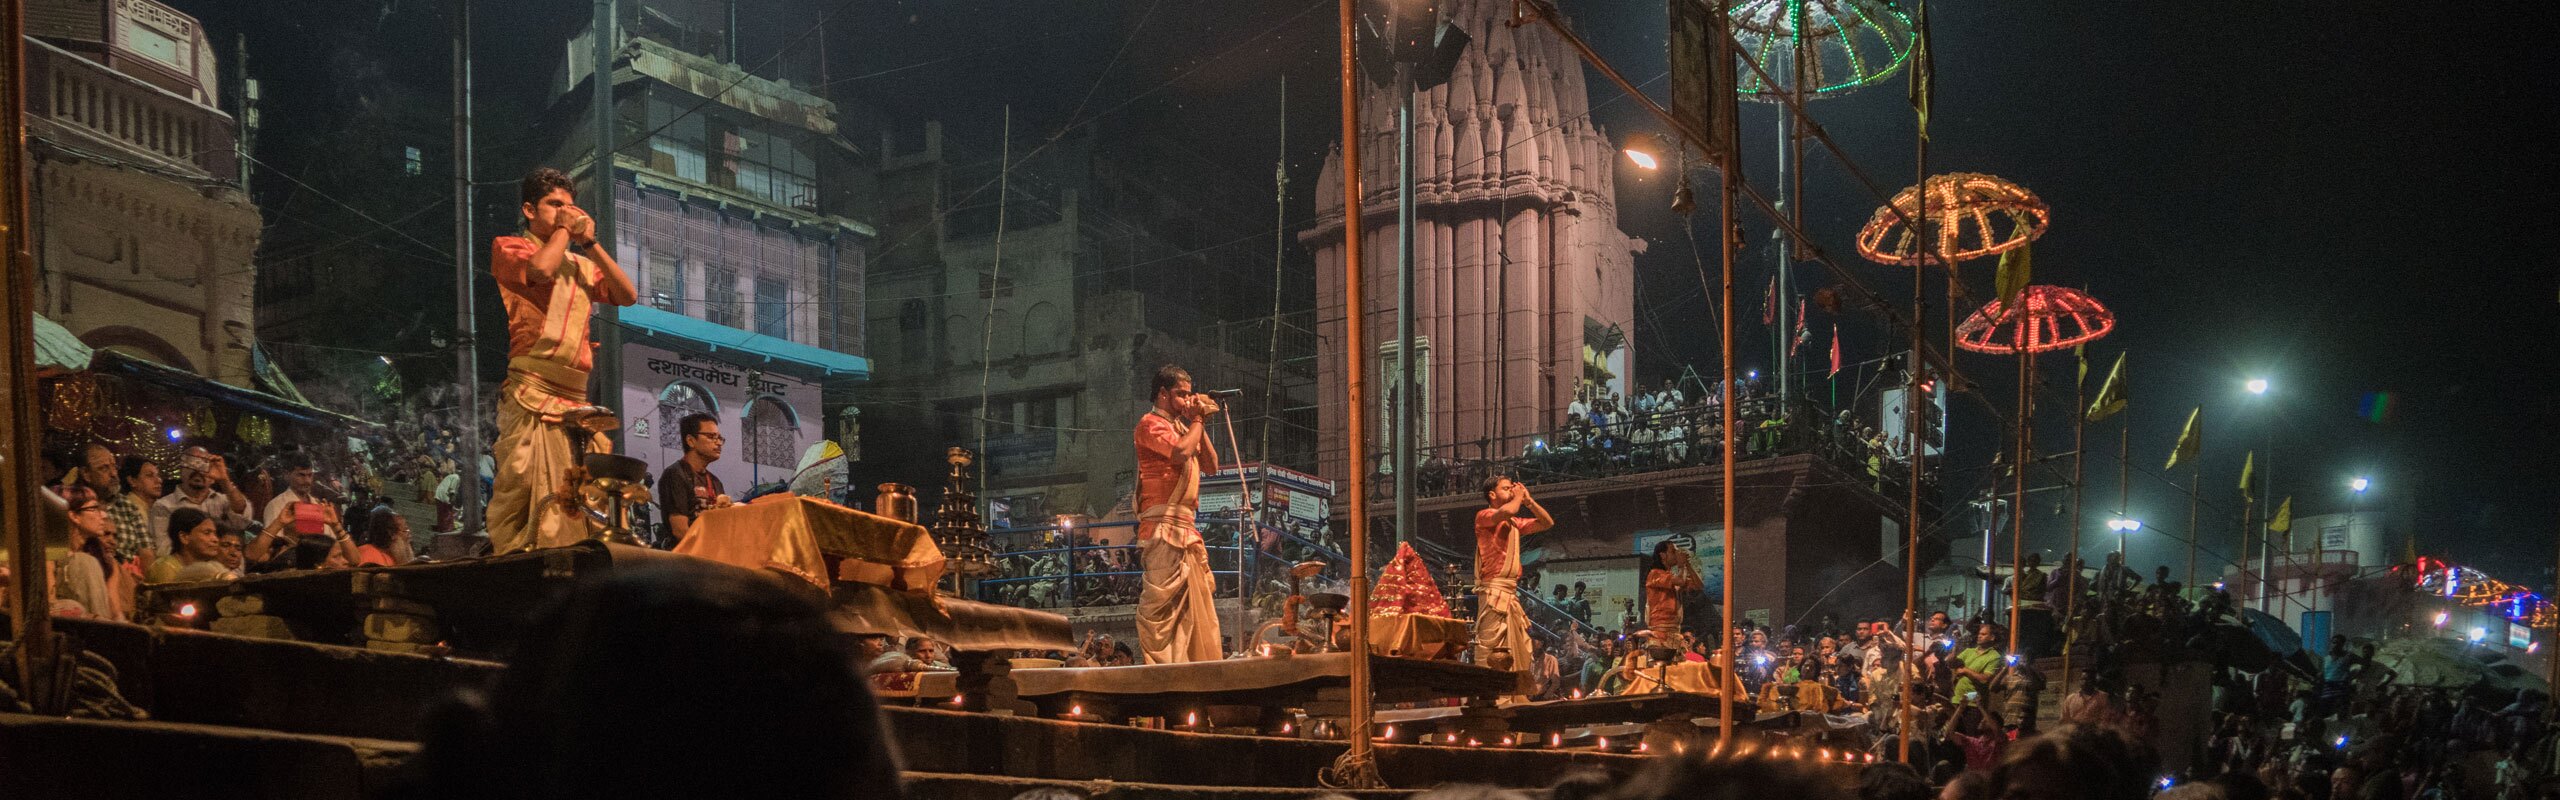 9-Day India Tour to Holiest City Varanasi